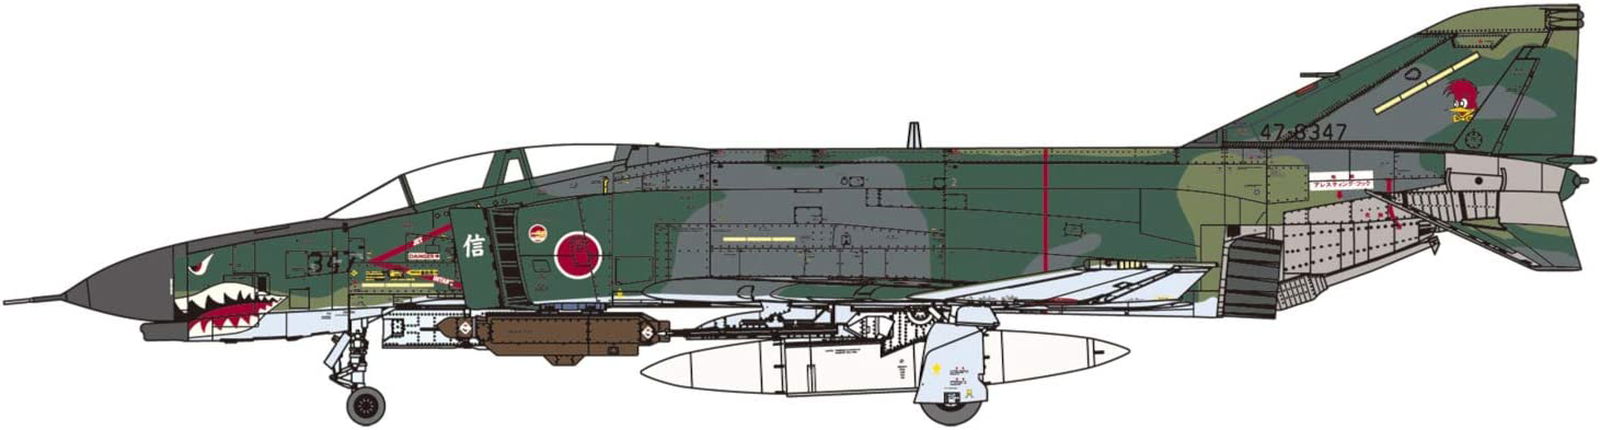 Fine Molds FP42 JASDF RF-4EJ - BanzaiHobby